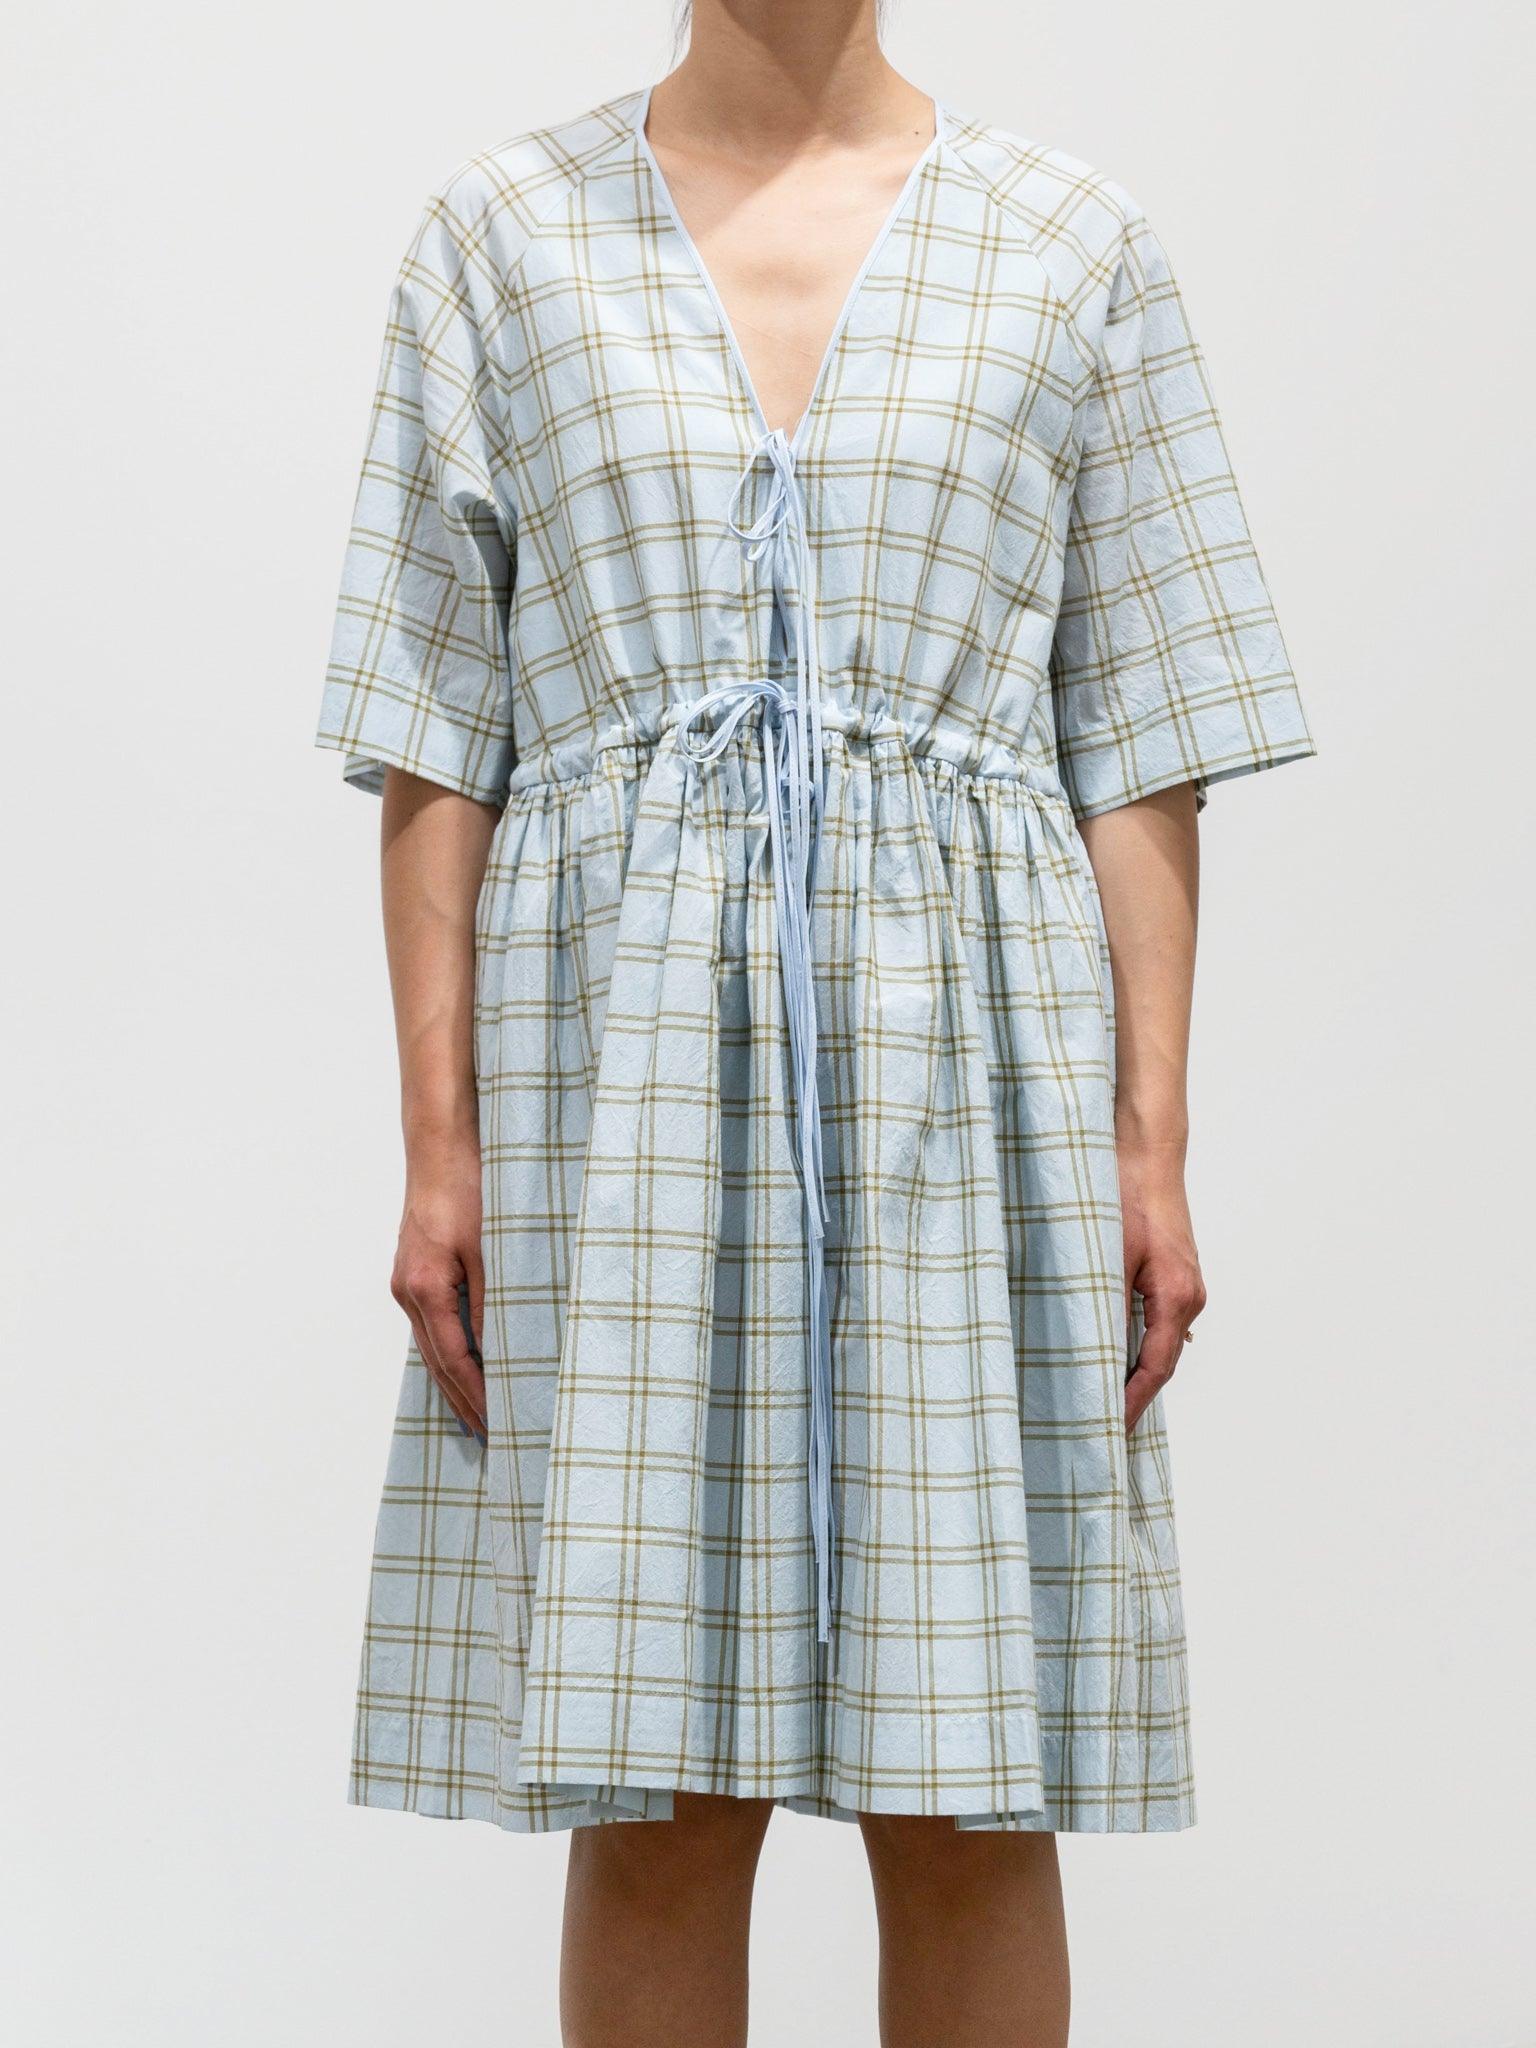 Namu Shop - Sara Lanzi Minetta Dress - Wrinkled Fil a Fil Check